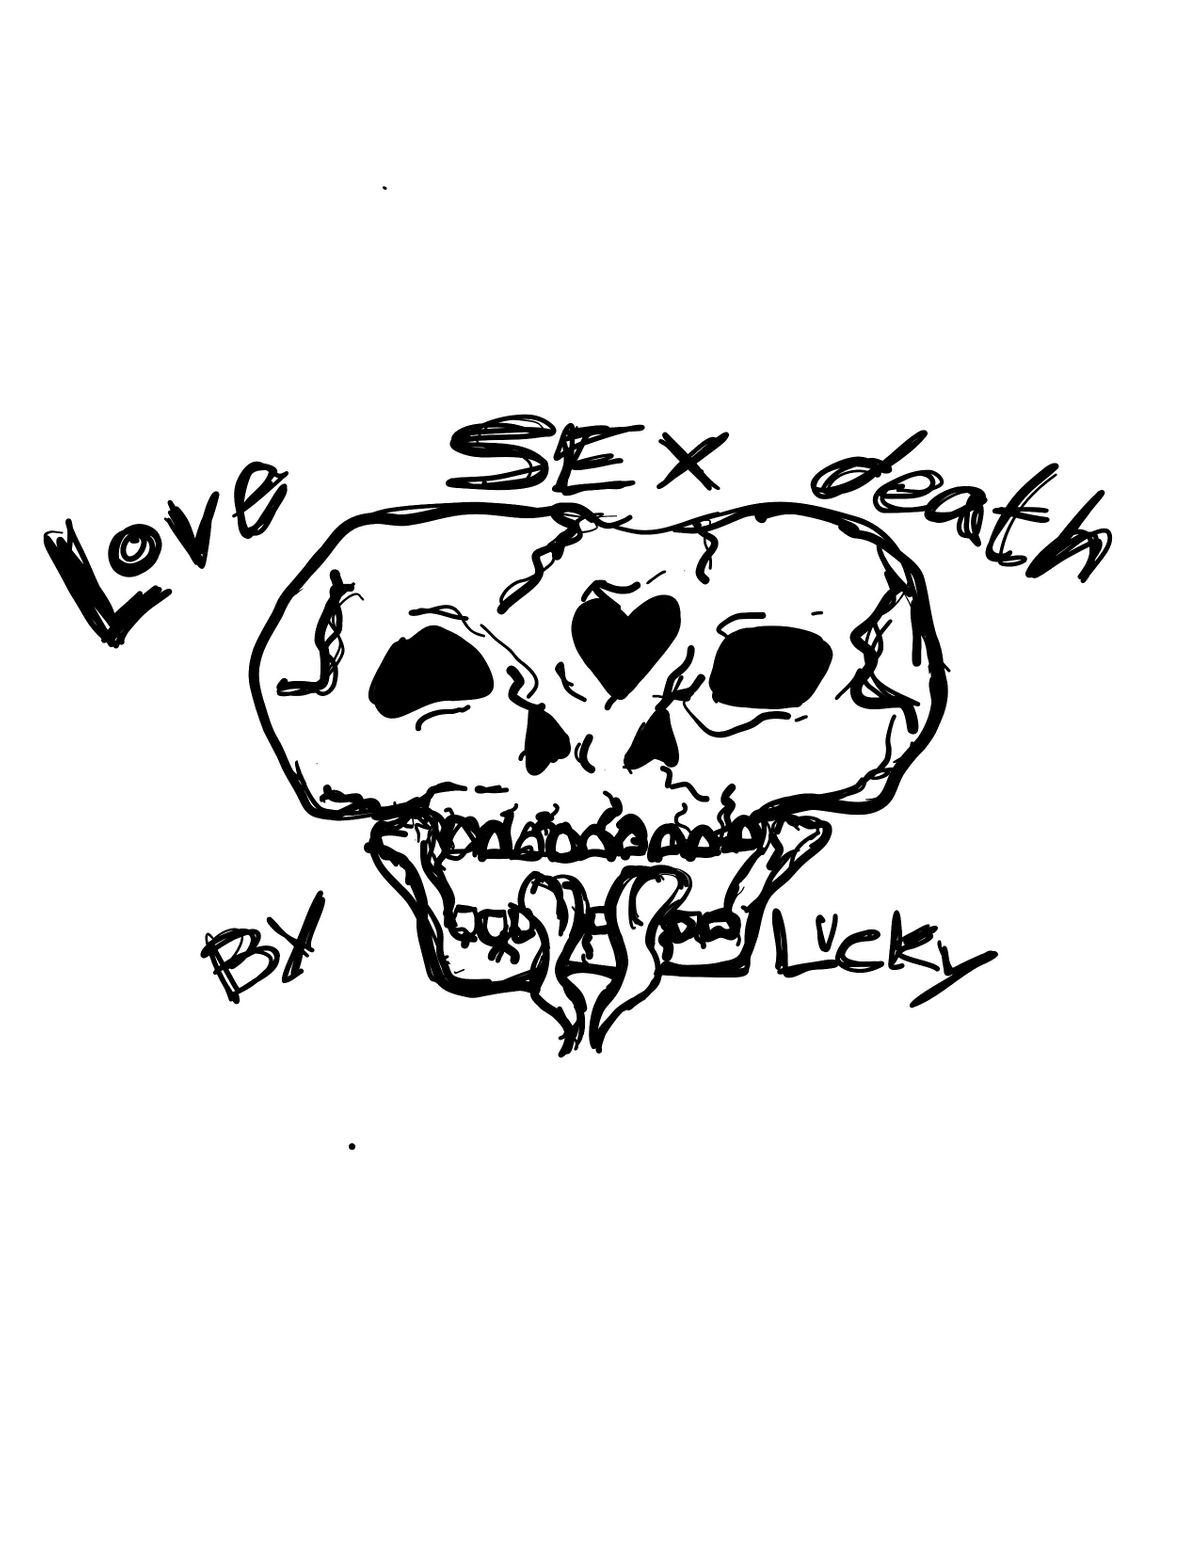 LOVE SEX DEATH SPRING SHOWCASE